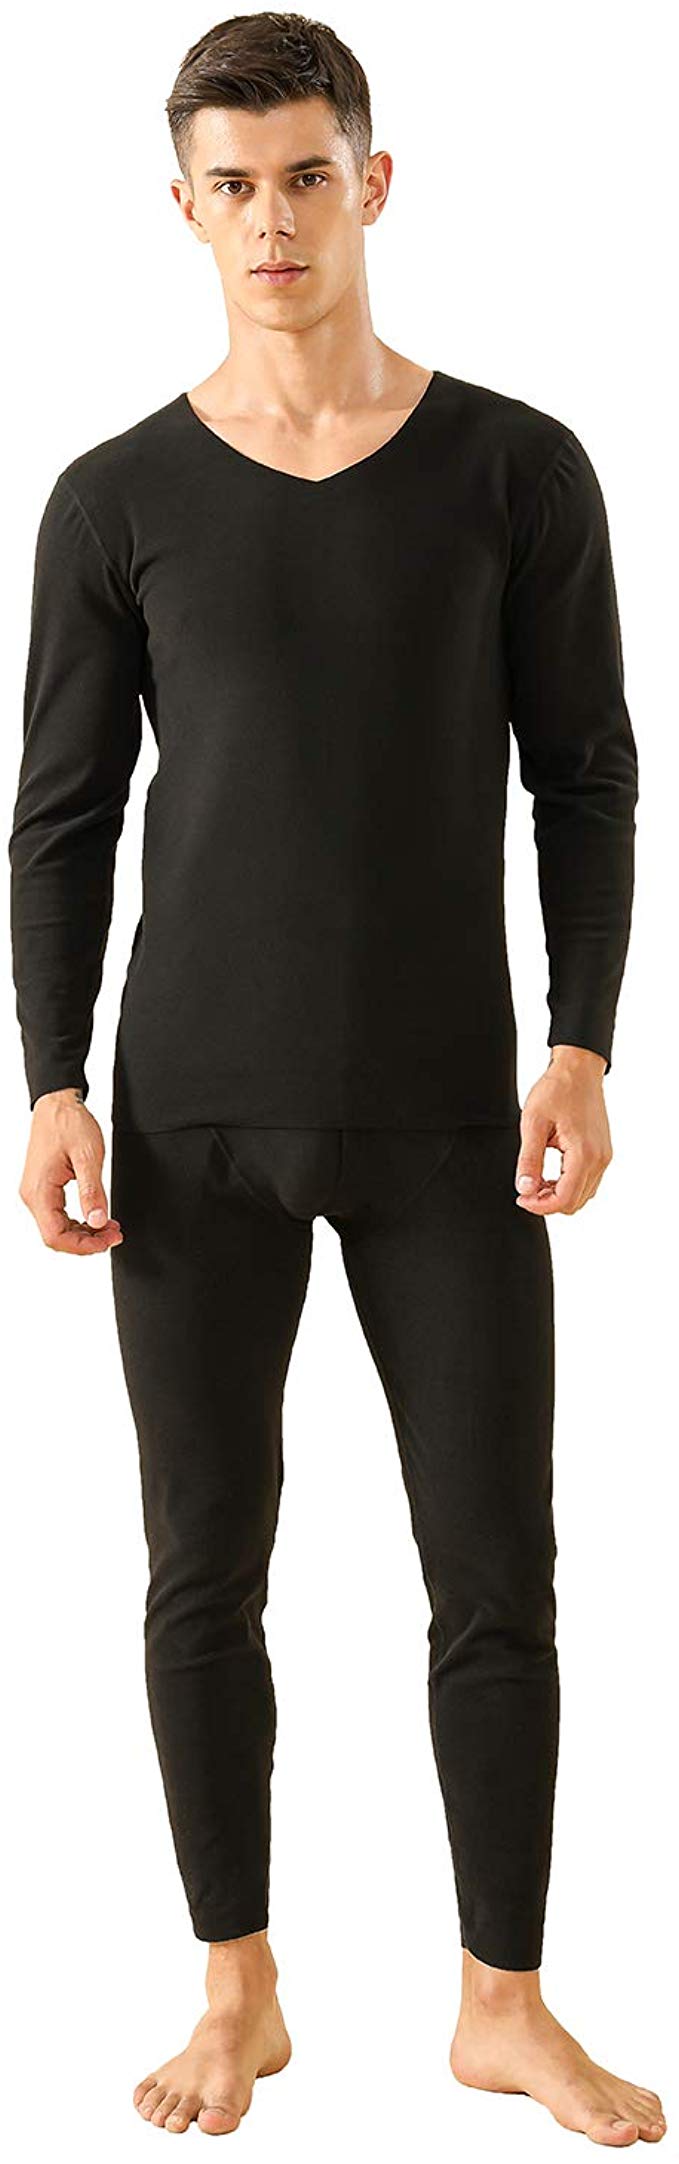 Men's Invisible Thermal Underwear Fleece Thermals Base Layer Long John Set